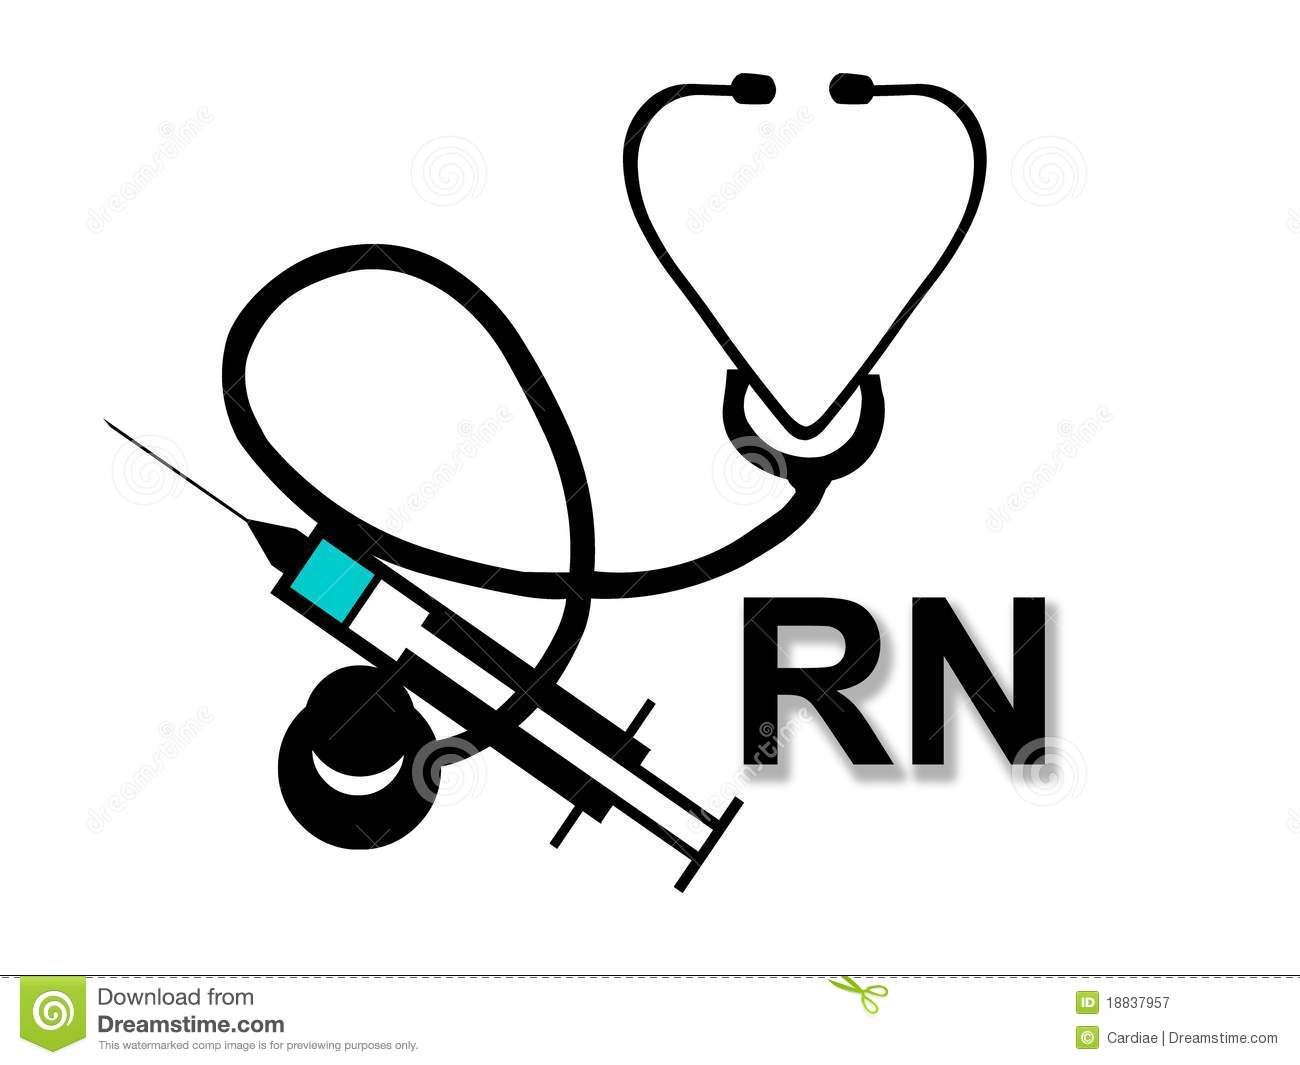 Nurse clipart licensed vocational nurse. Pin on nursing this